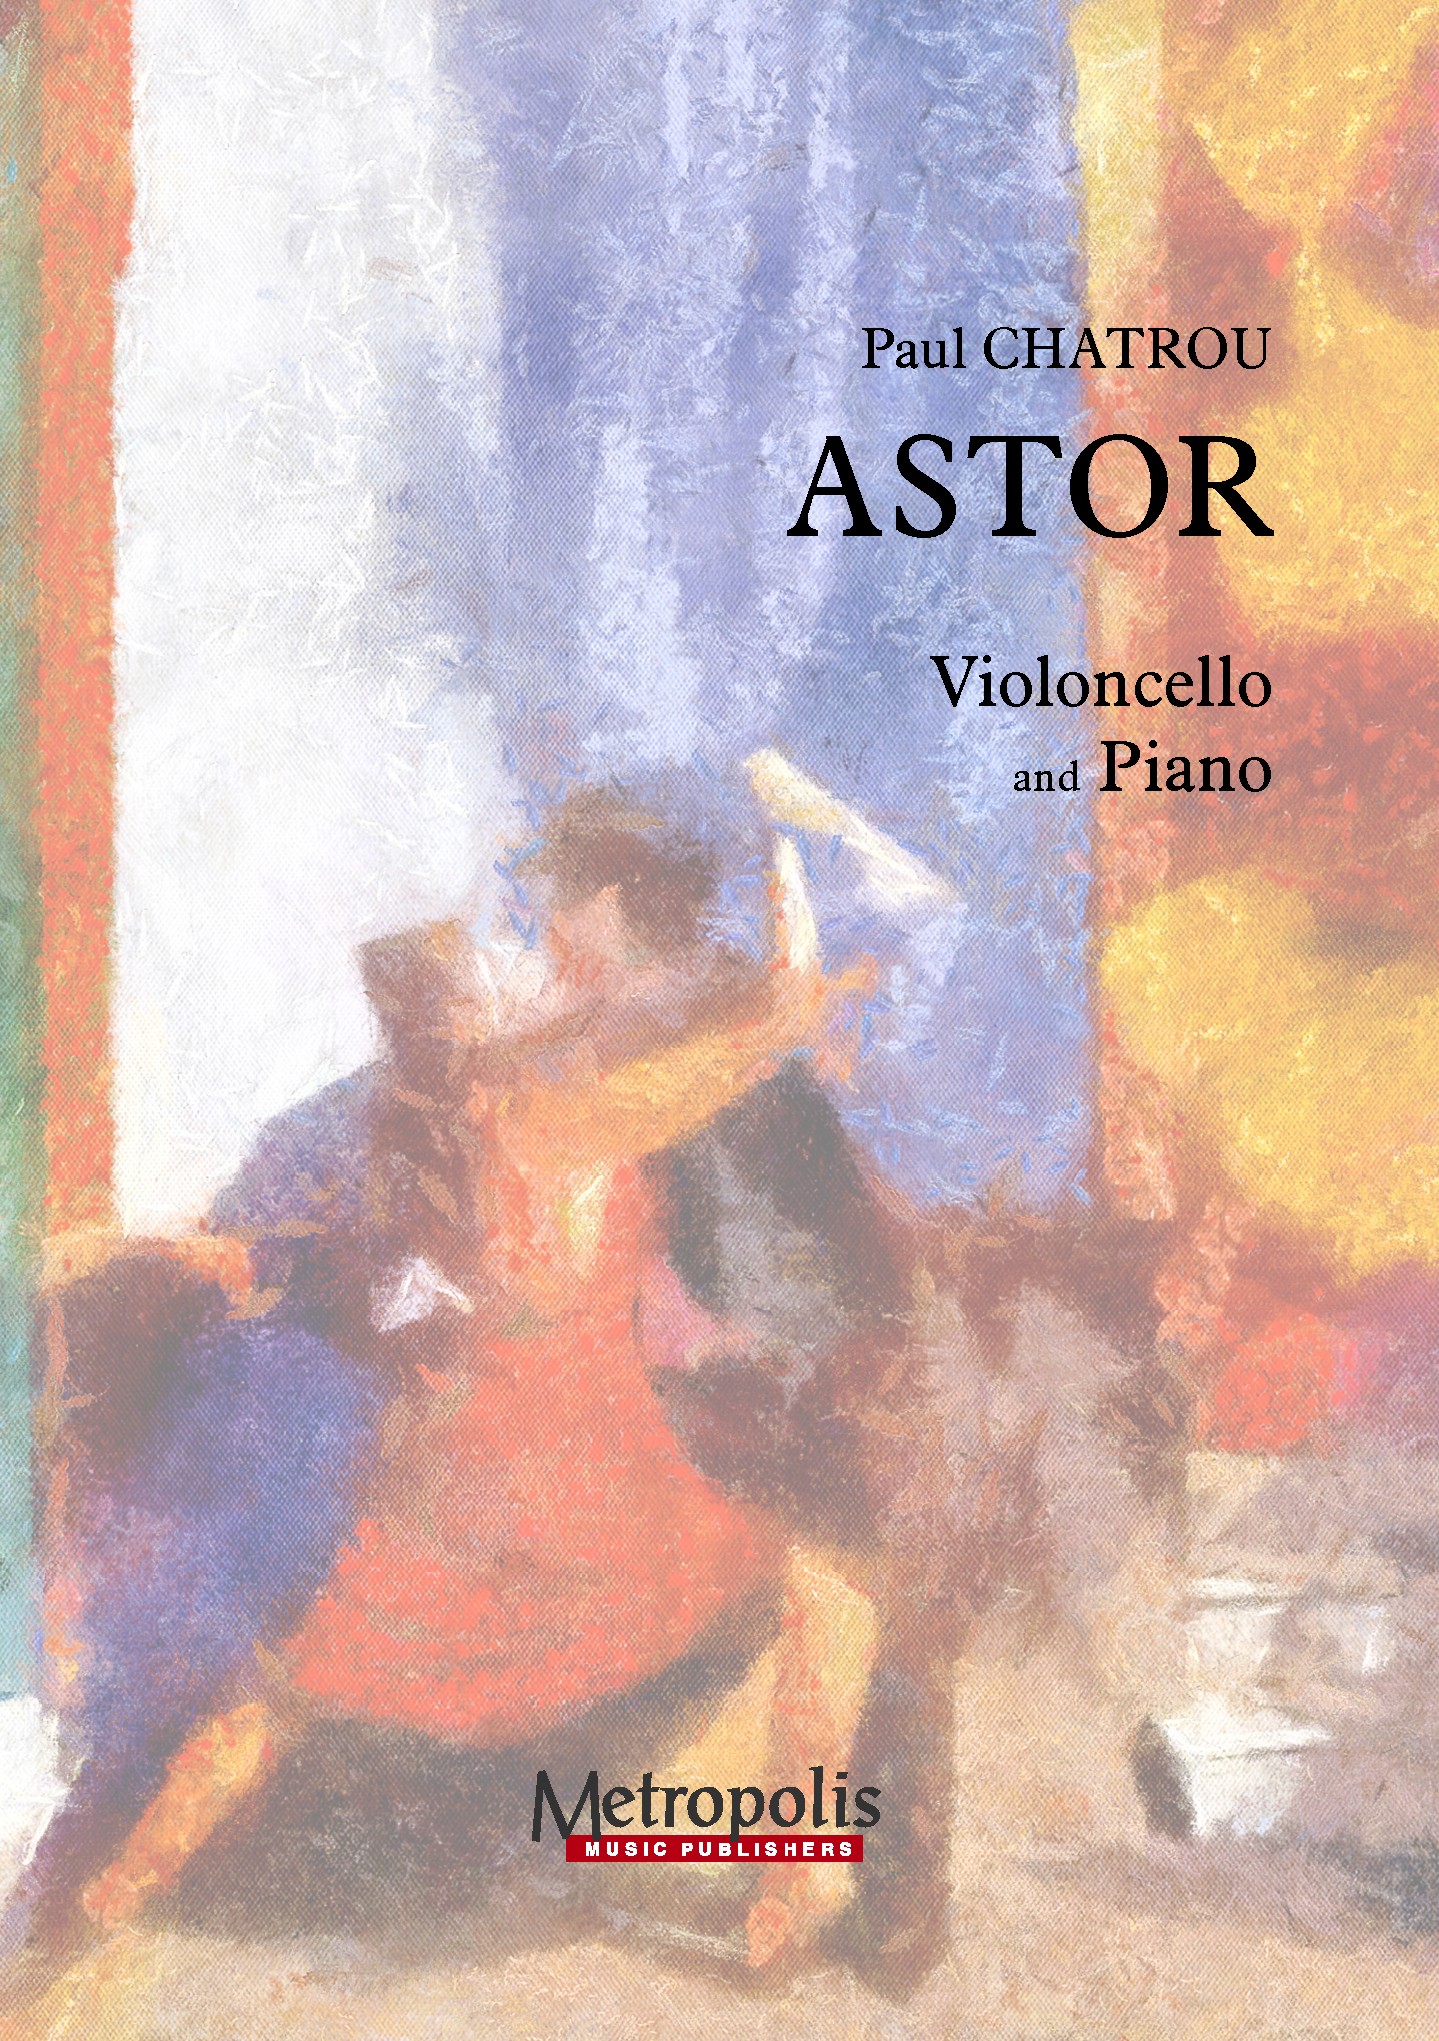 Astor (CHATROU PAUL)